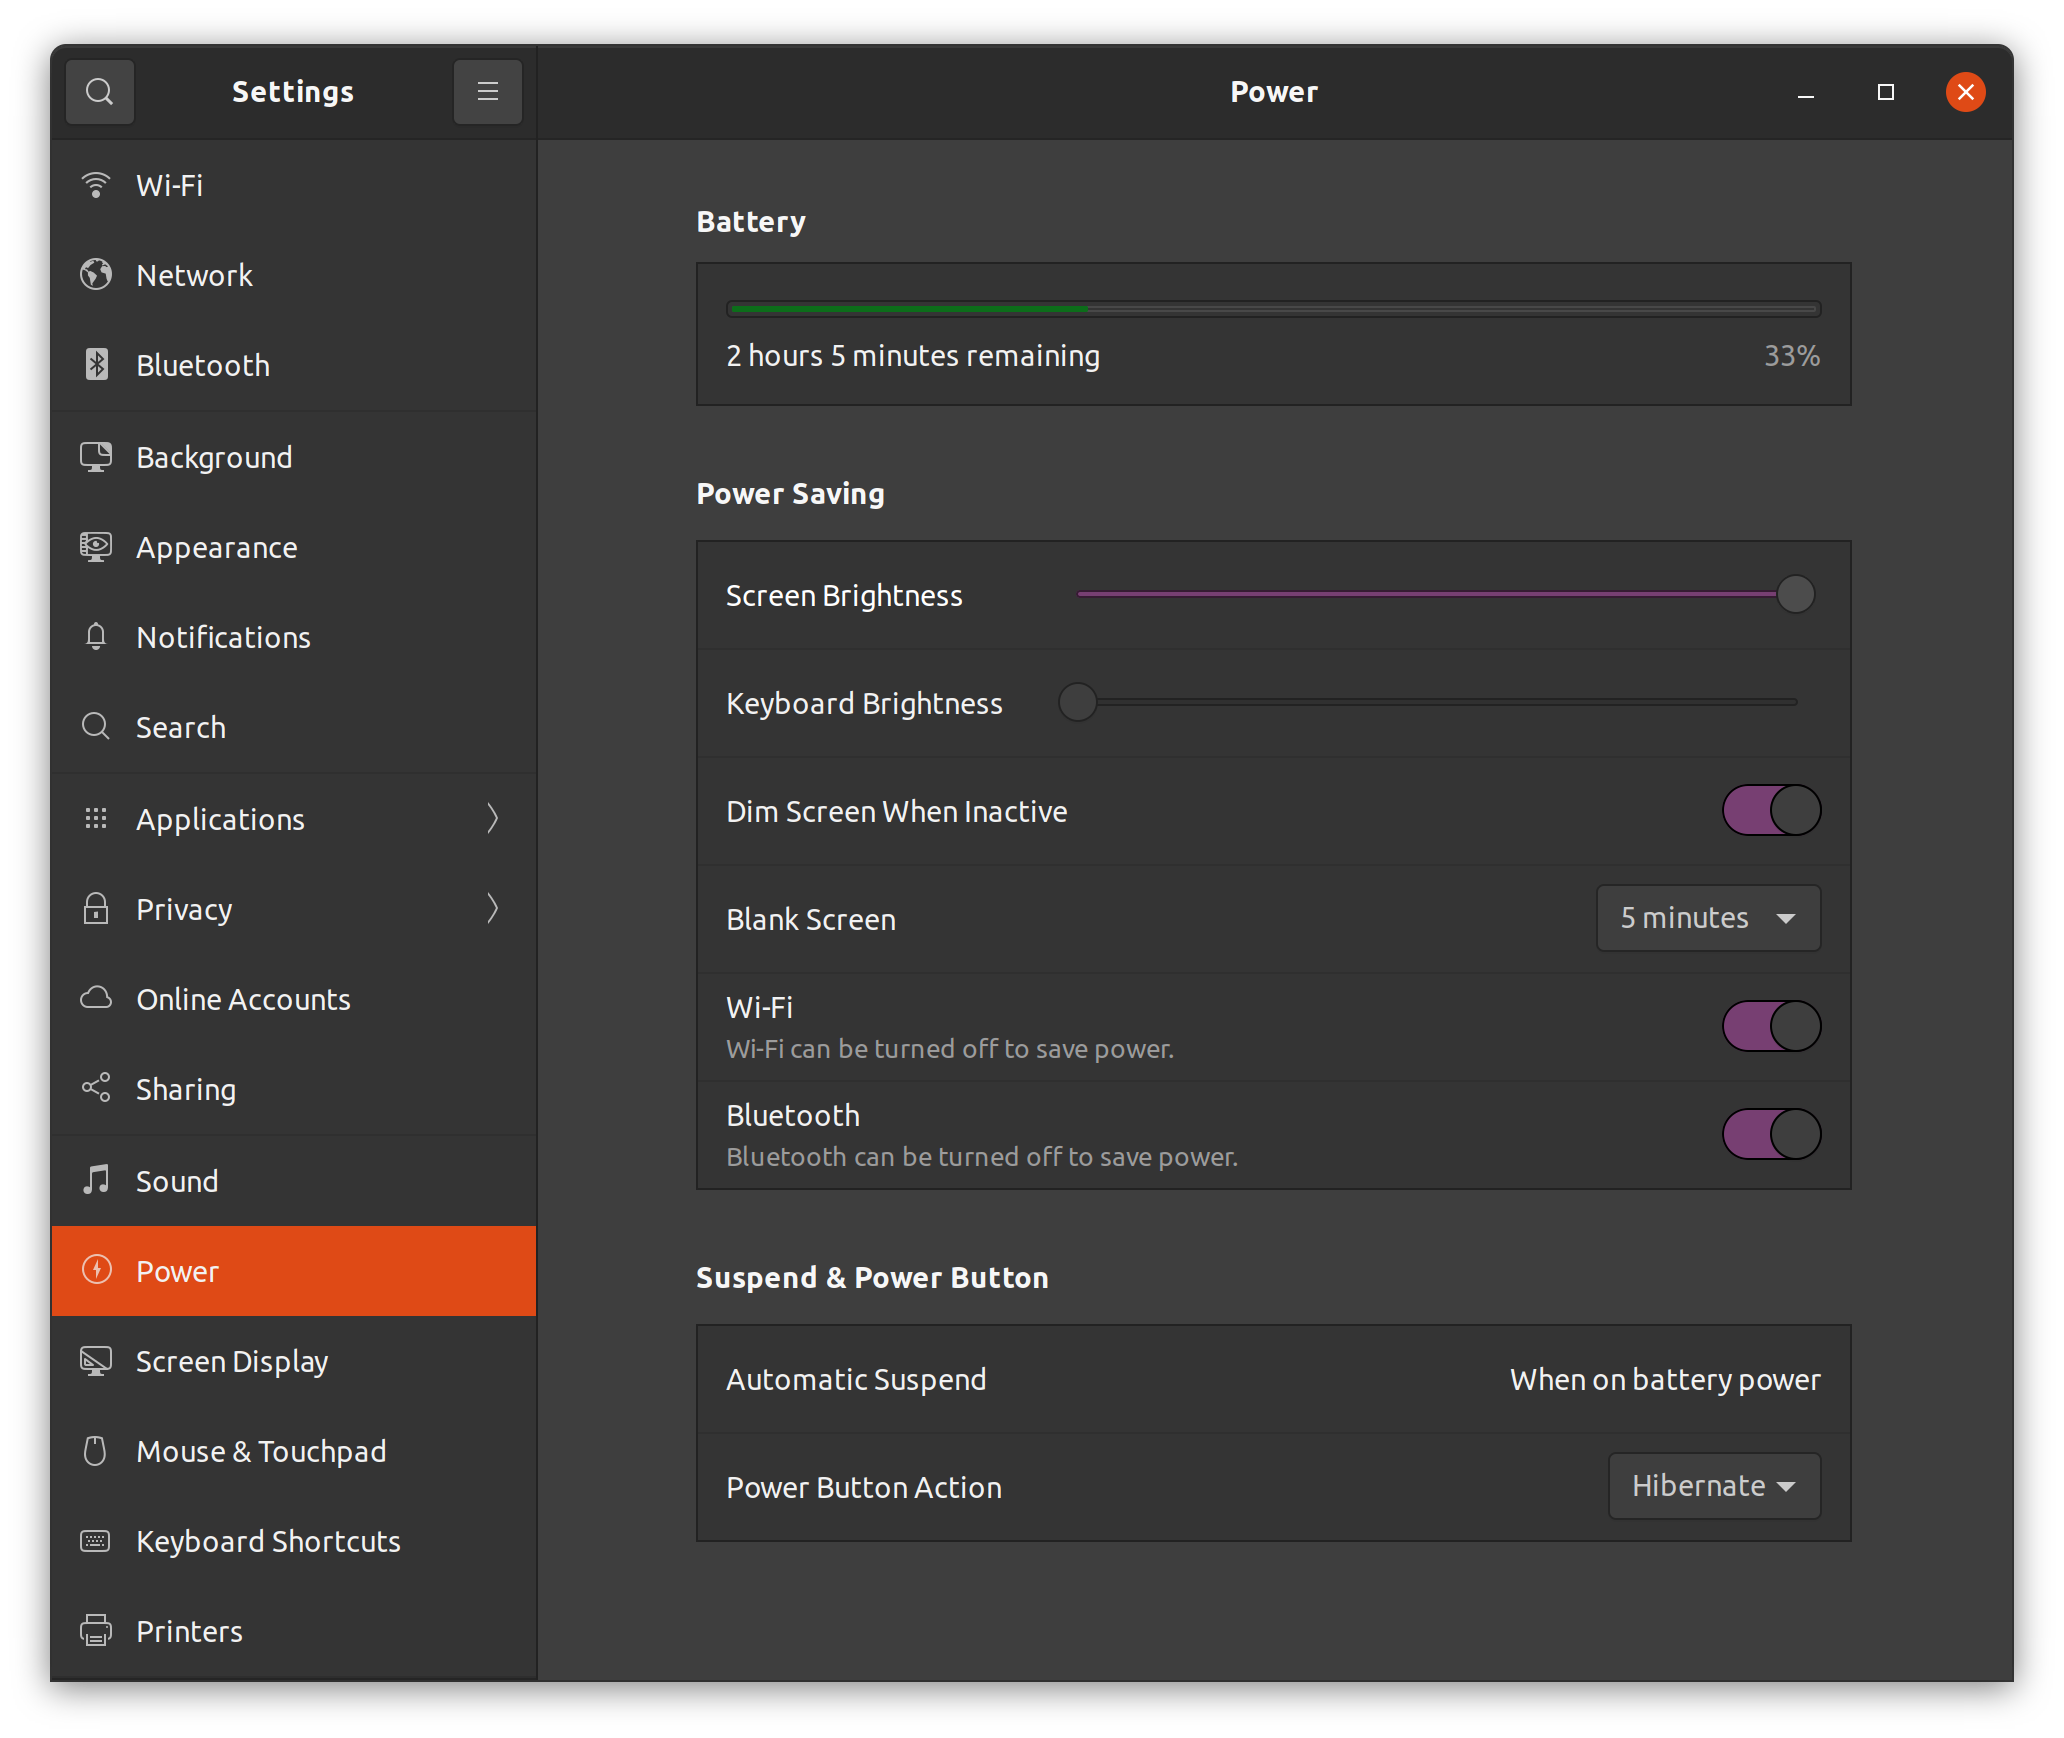 Hibernate option enabled in the GNOME settings menu